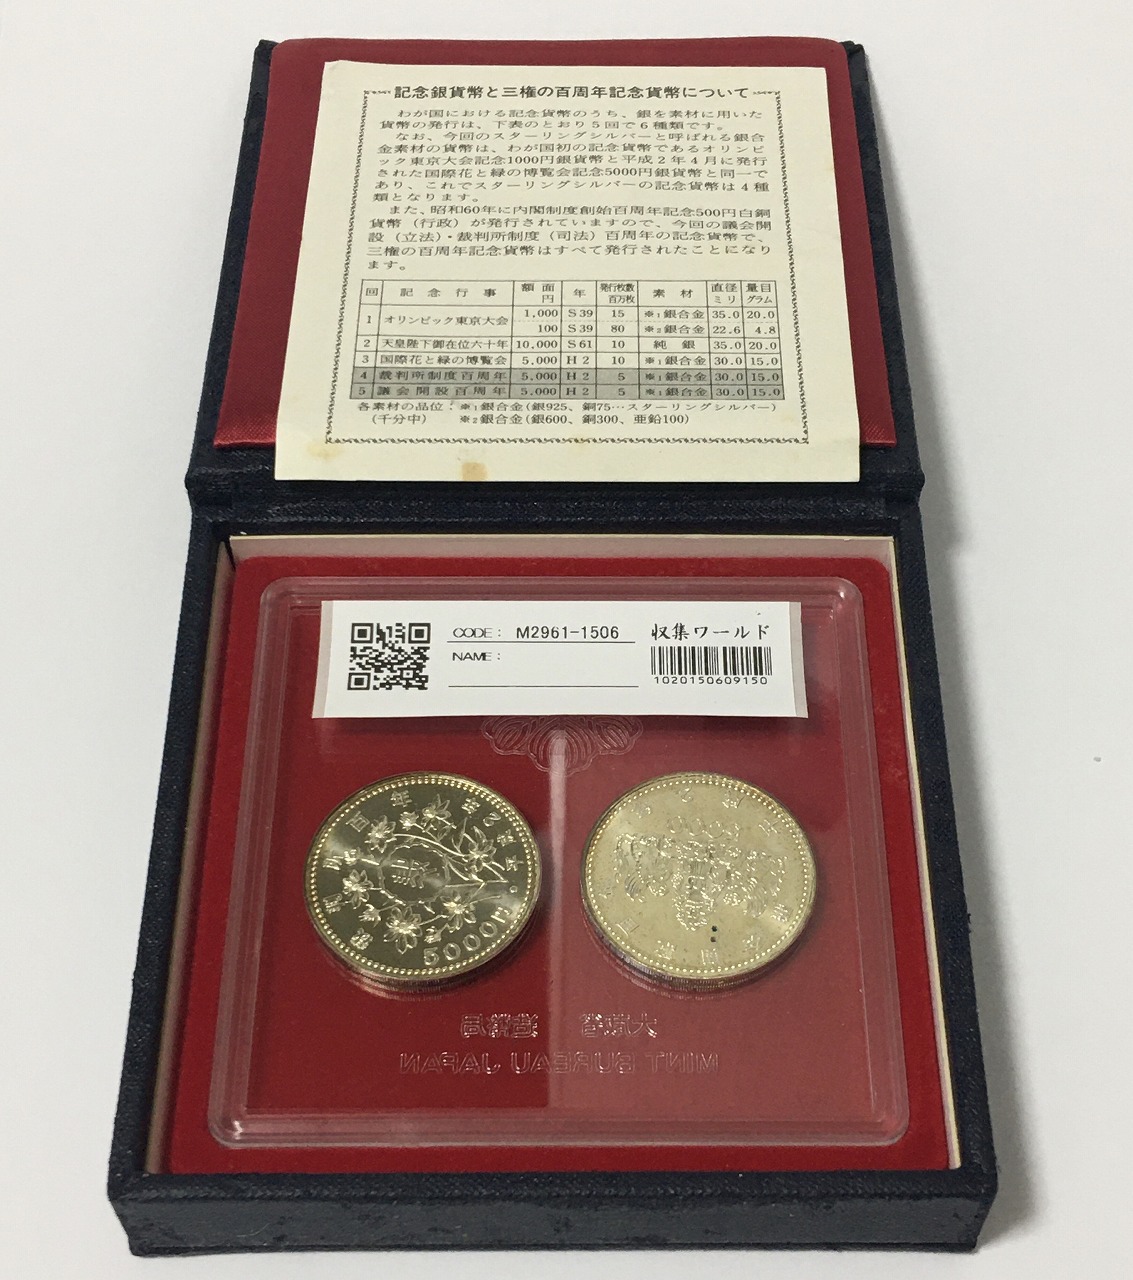 議会開設100周年記念と裁判所制度100周年記念5000円銀貨2枚セット 